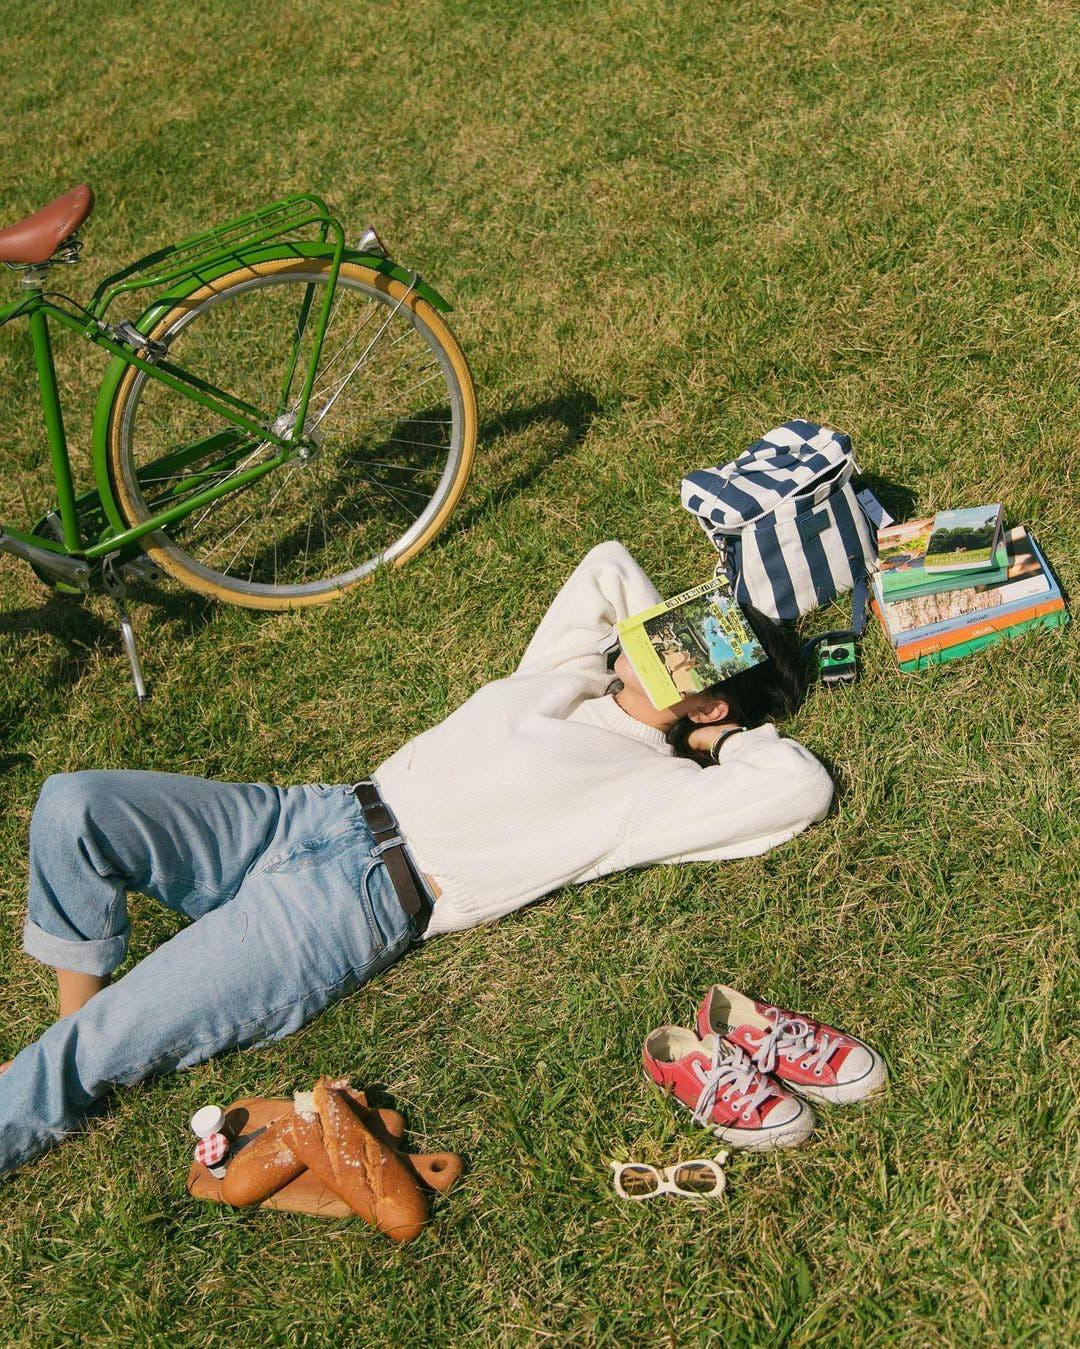 shoe grass pants person photography portrait wheel reading sneaker lawn